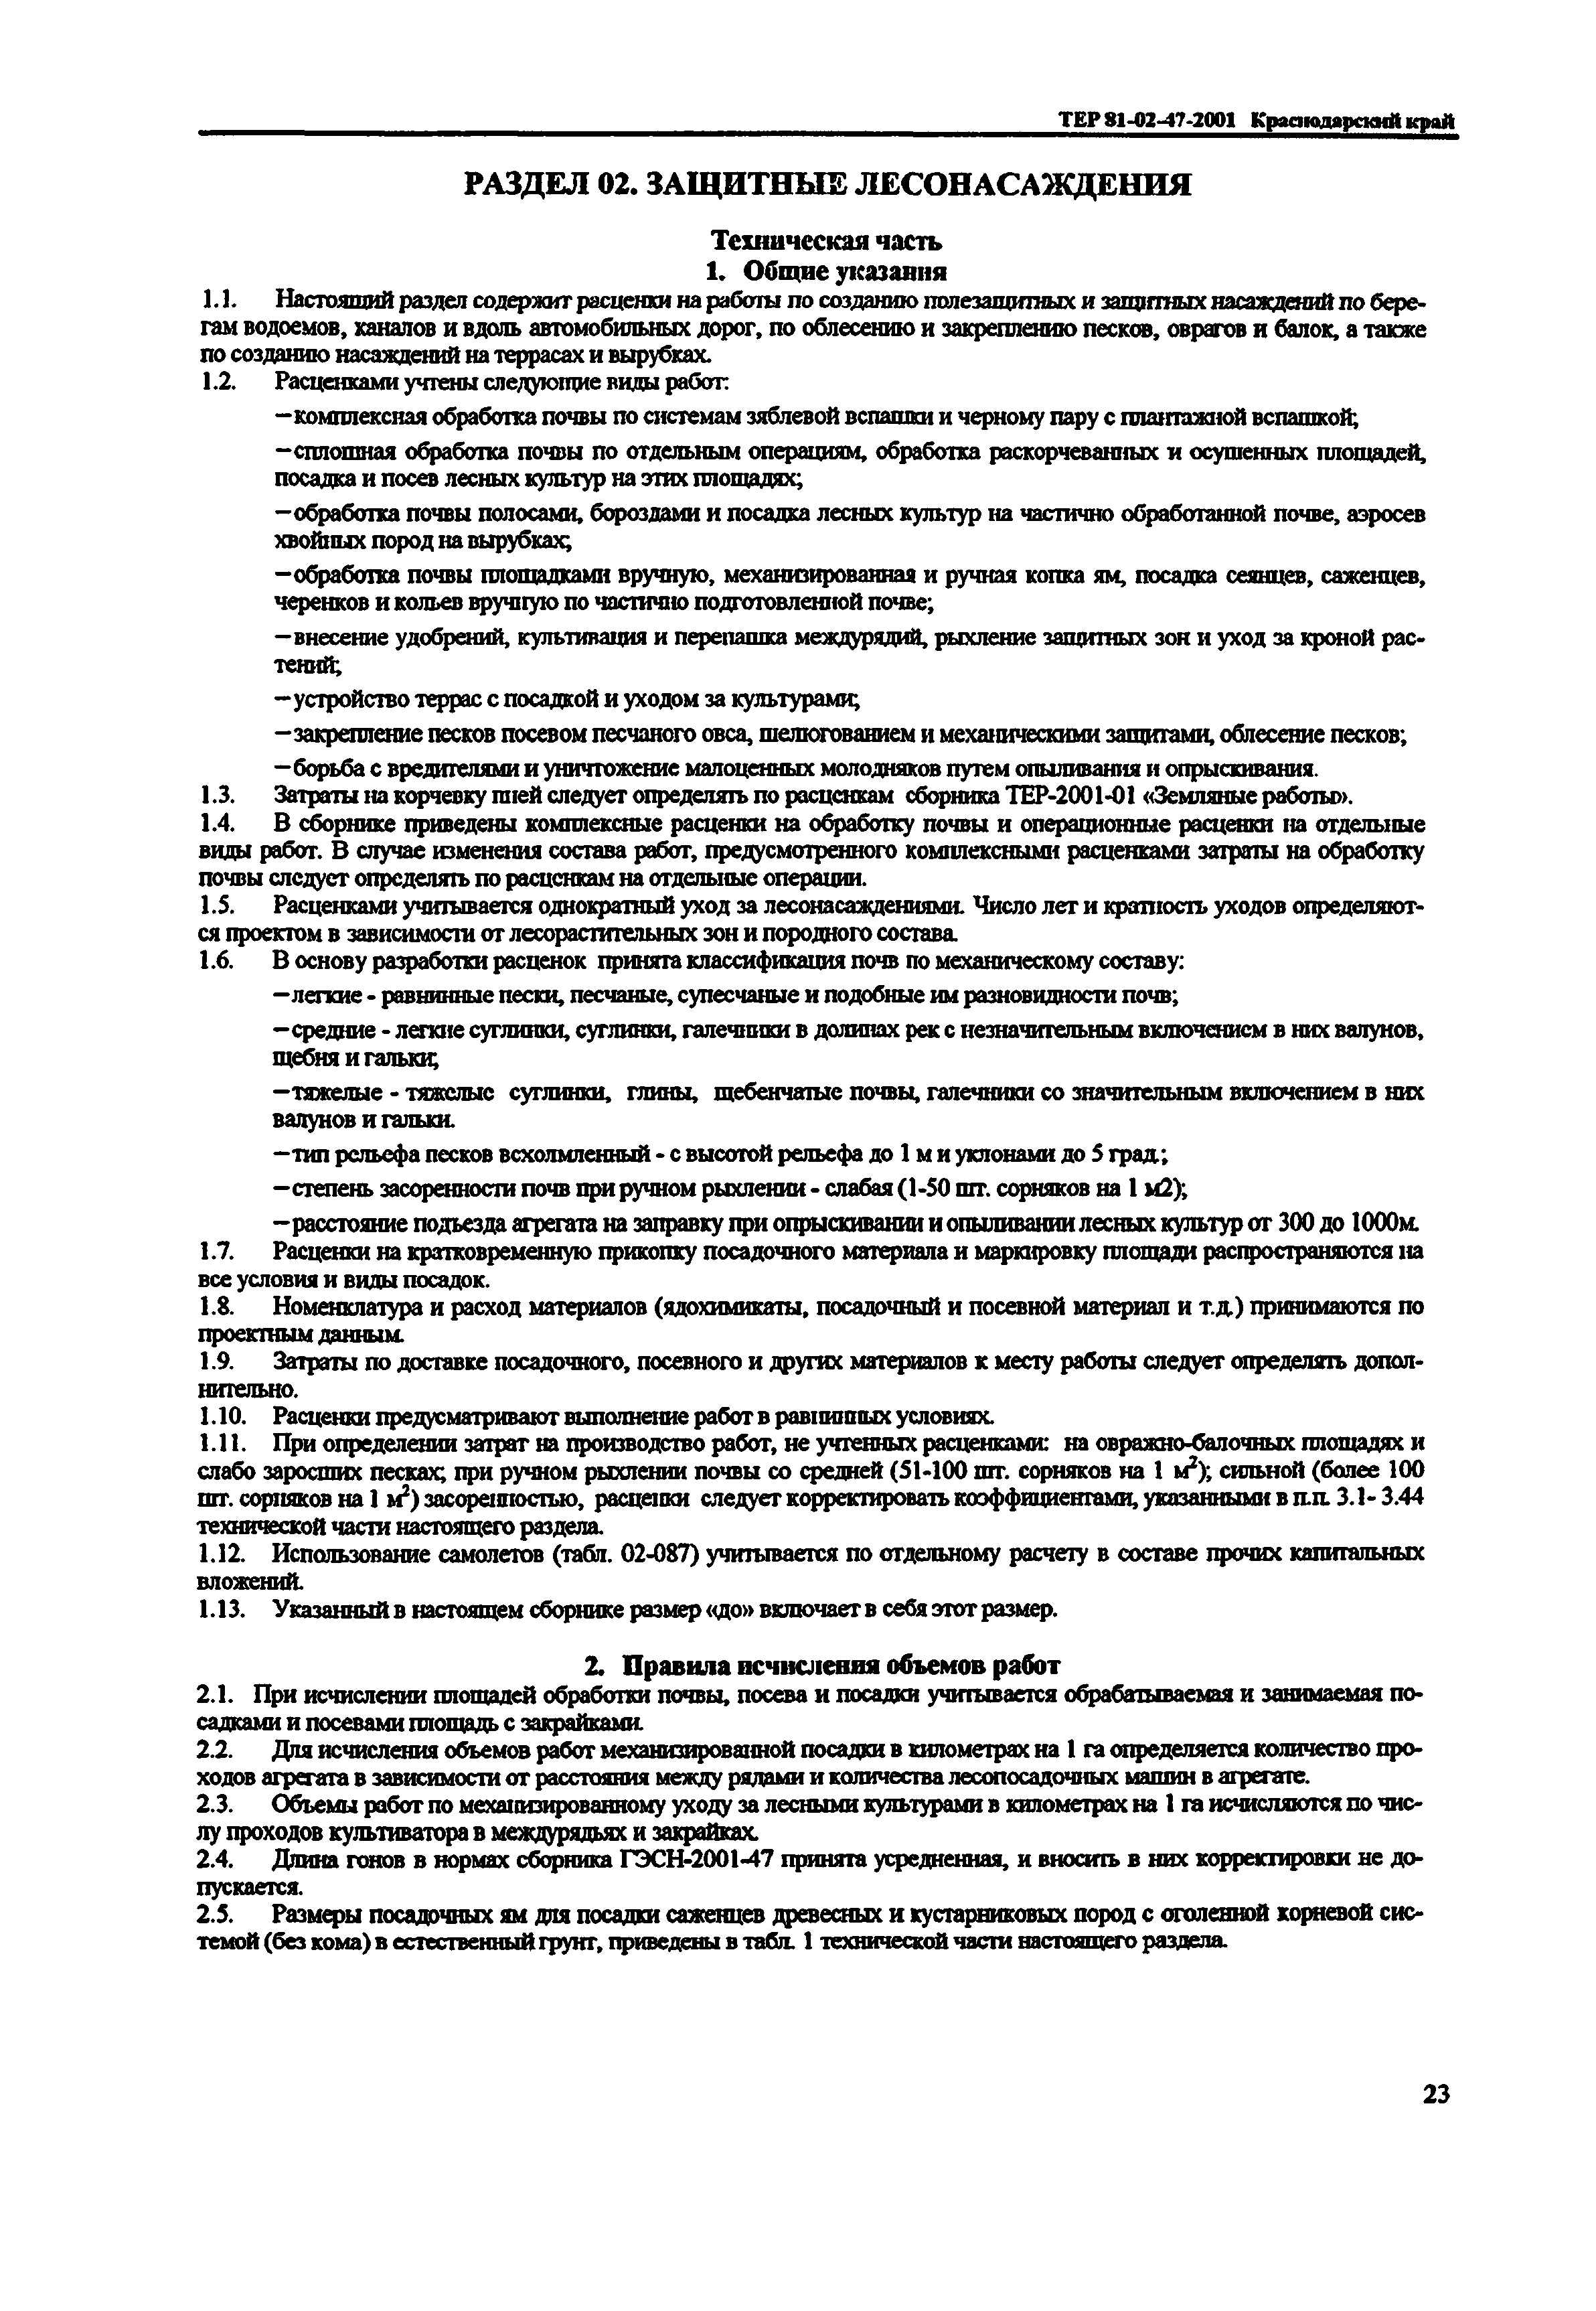 ТЕР Краснодарский край 2001-47